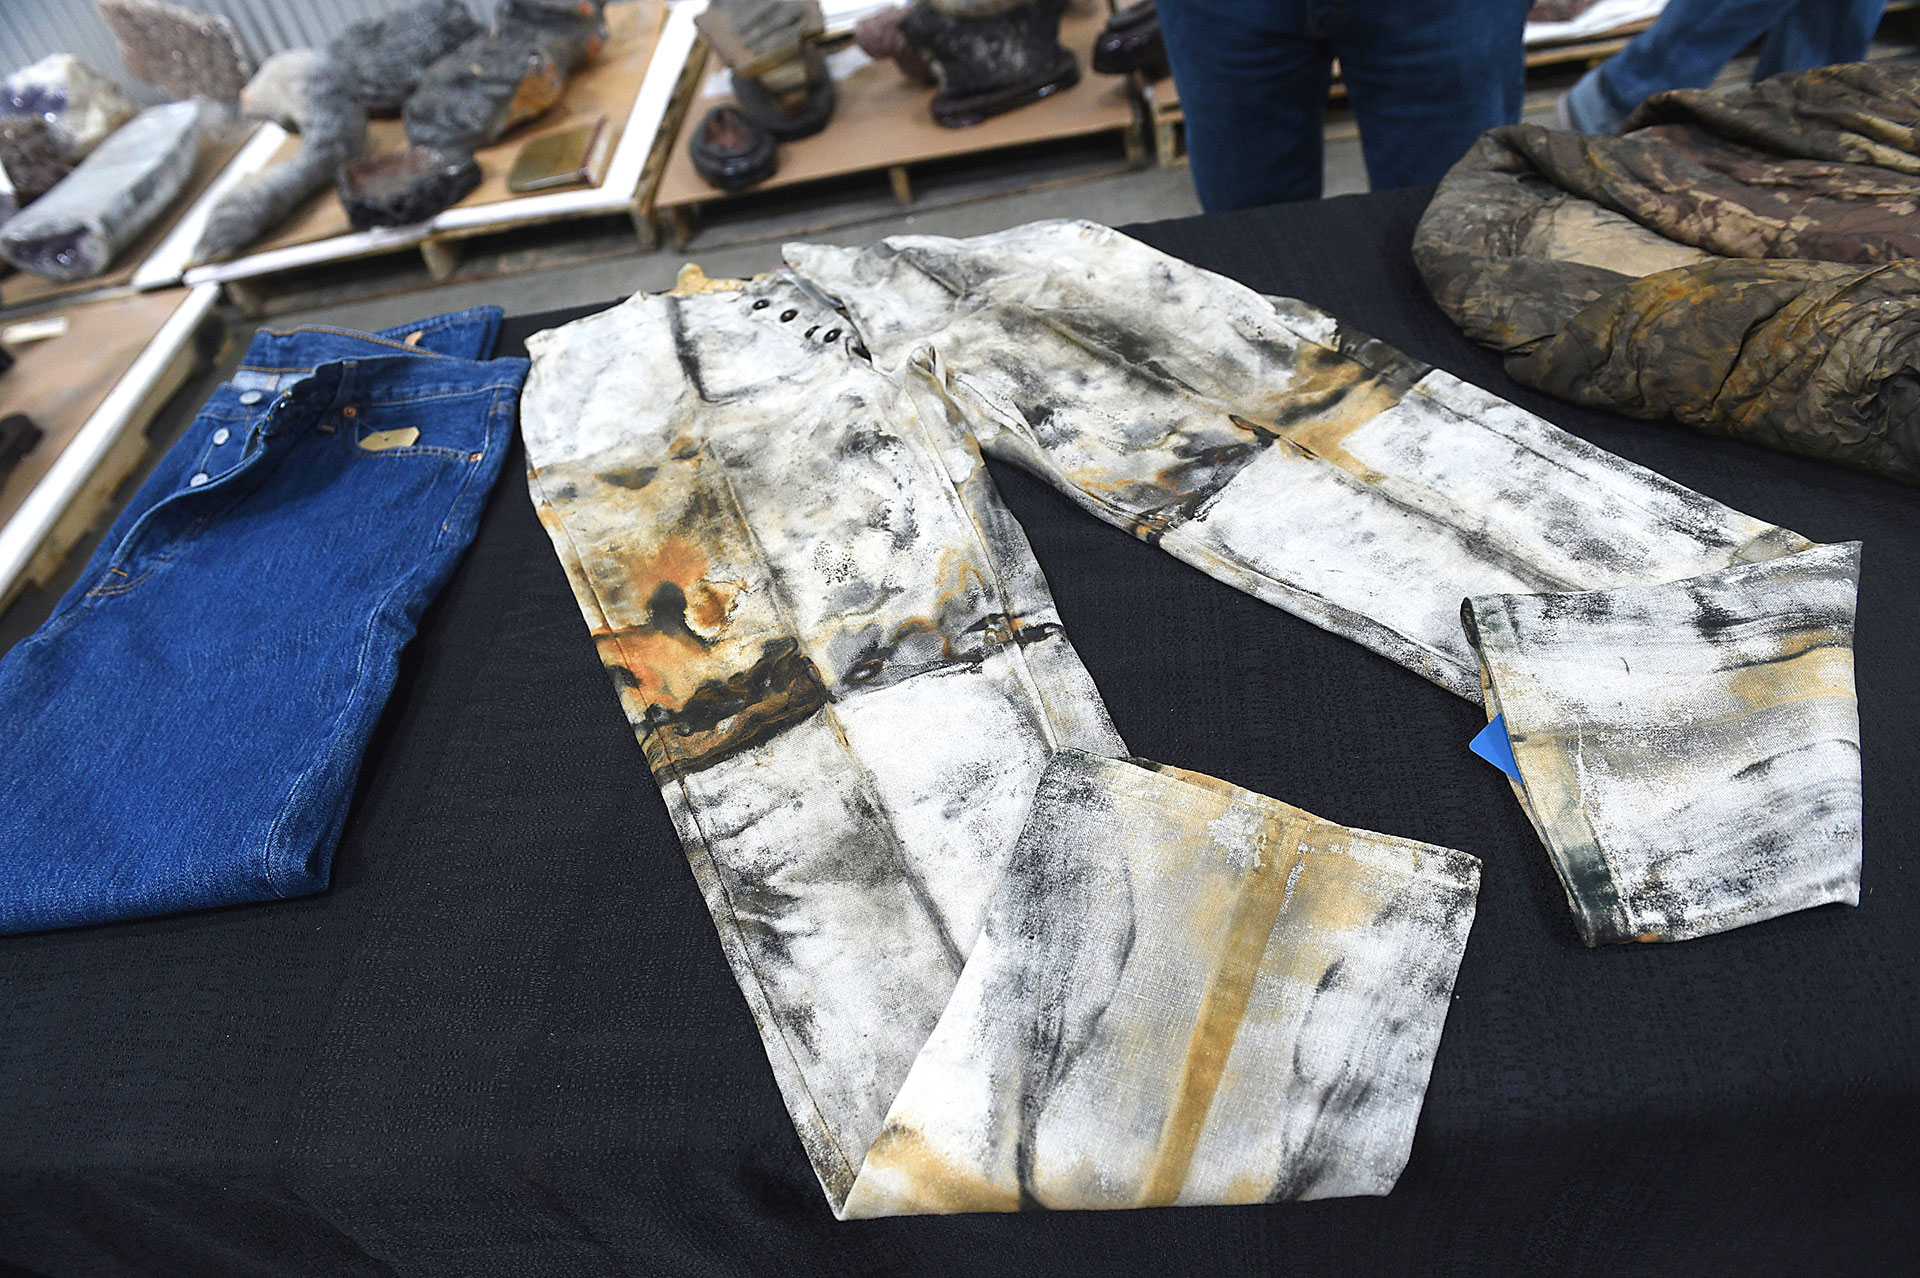 ARCHIVO - Un par de pantalones de trabajo, posiblemente hechos por o para Levi Strauss (Jason Bean / The Reno Gazette-Journal a través de AP, archivo)

